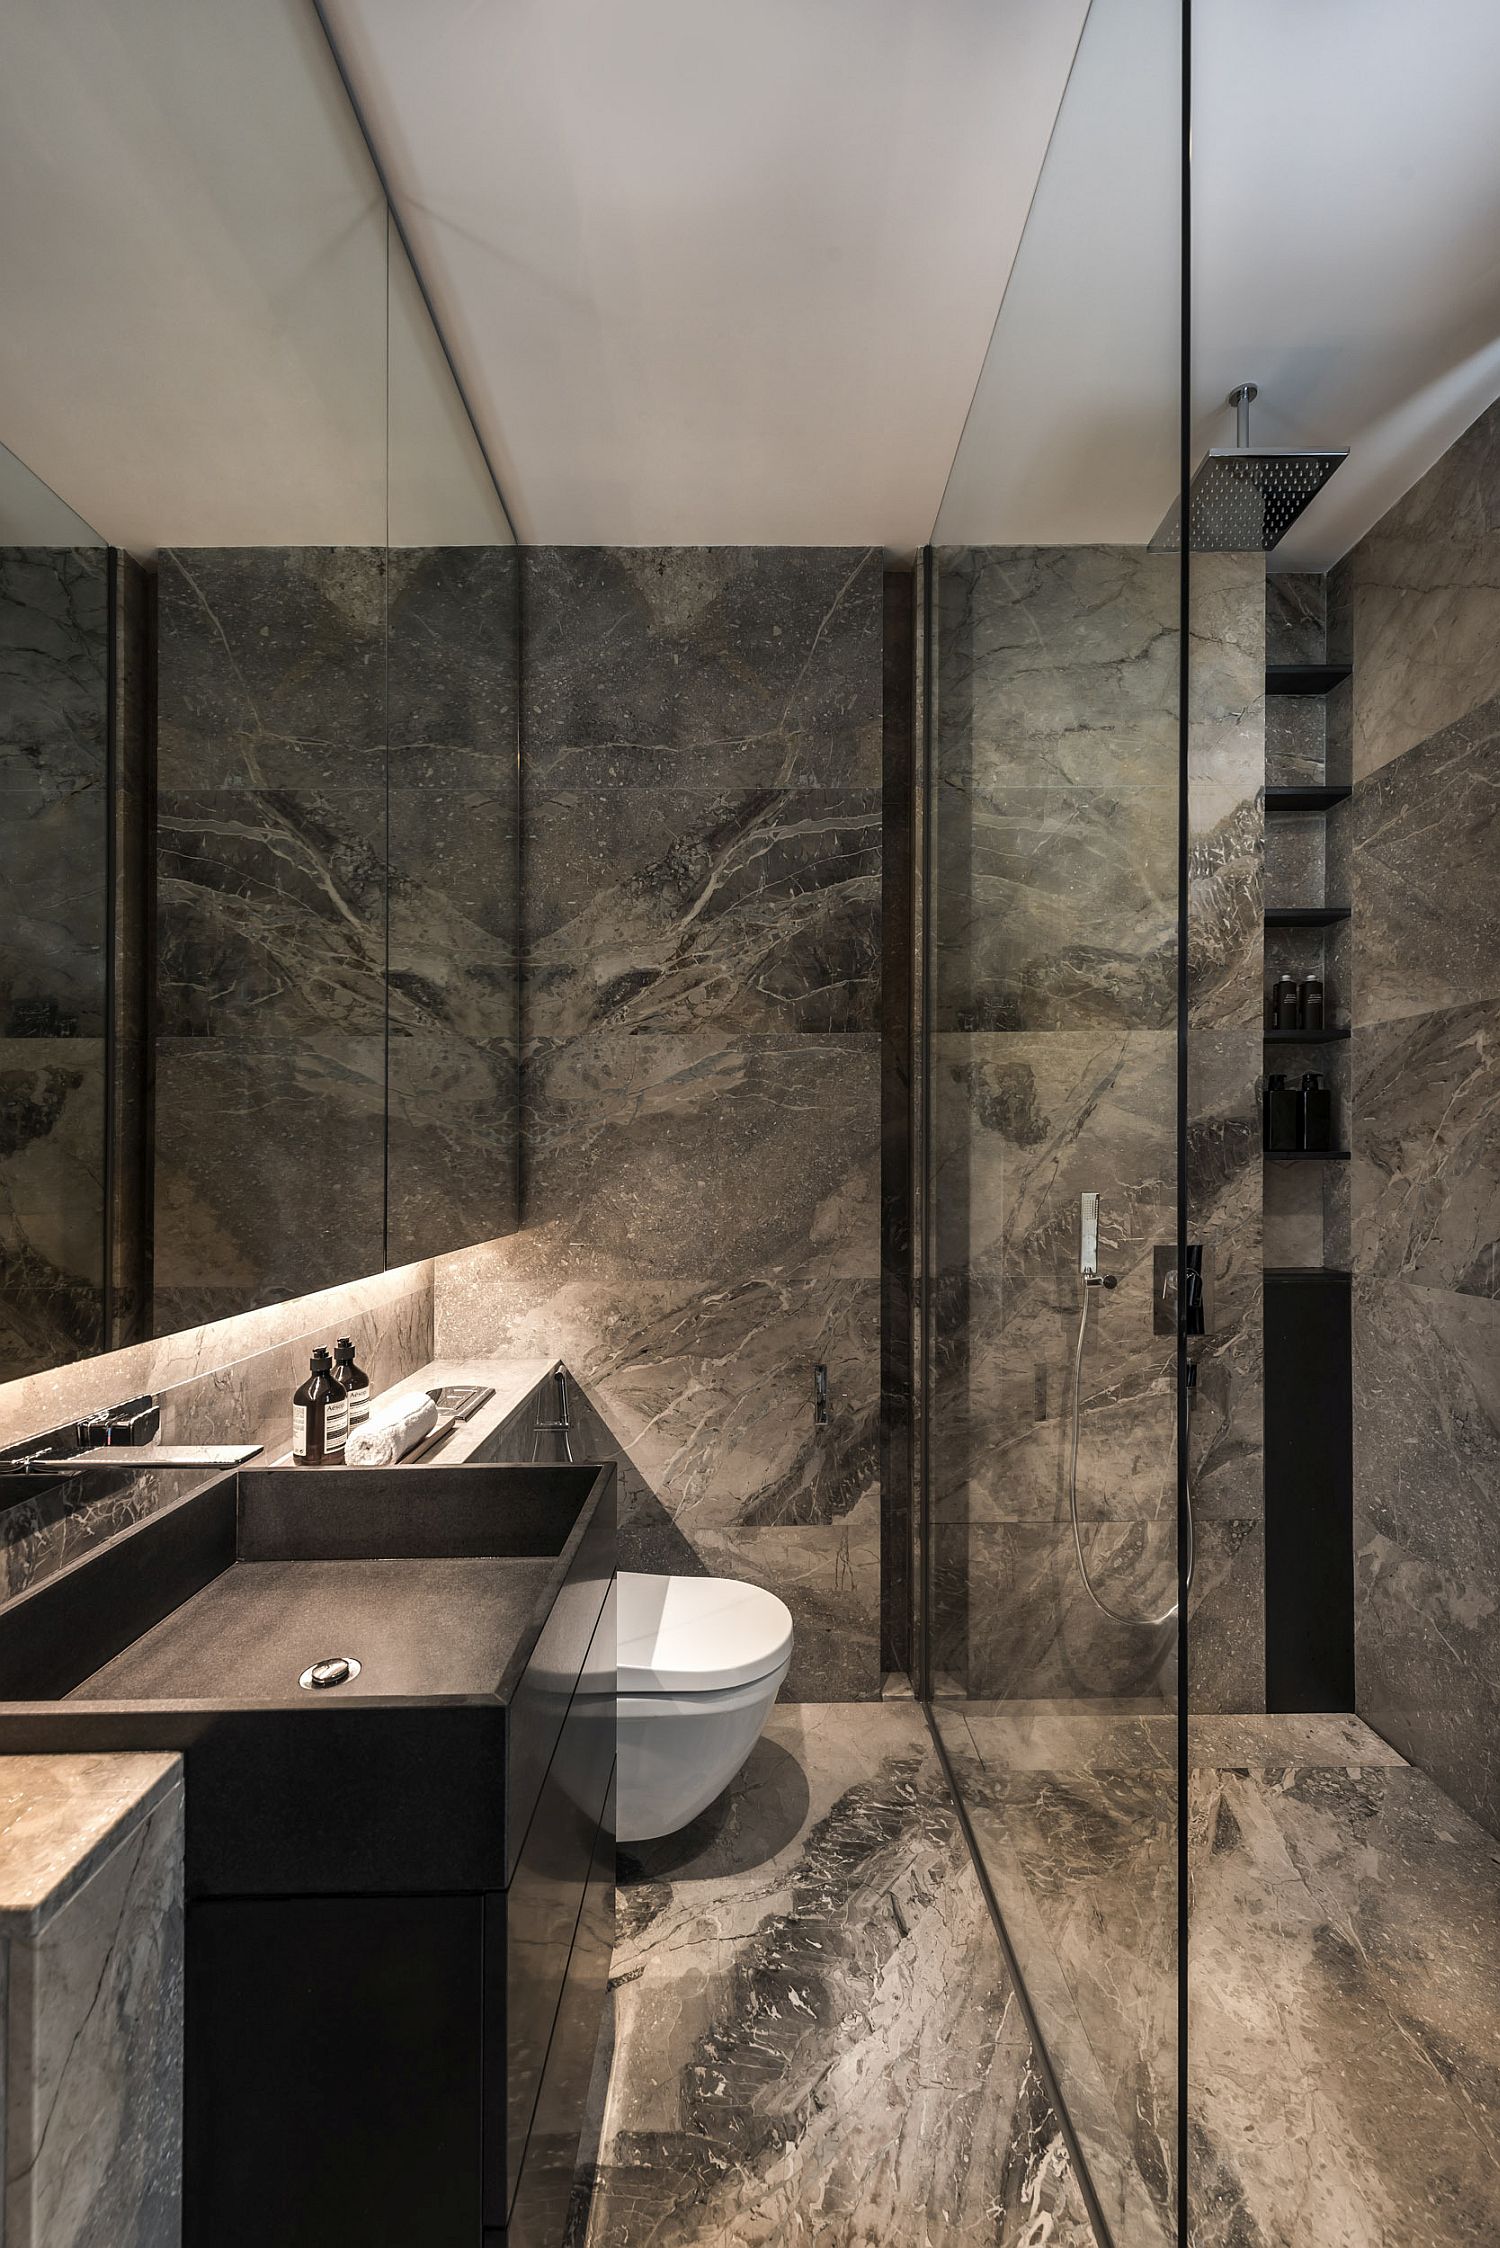 Contemporary-bathroom-in-gray-and-white-in-stone